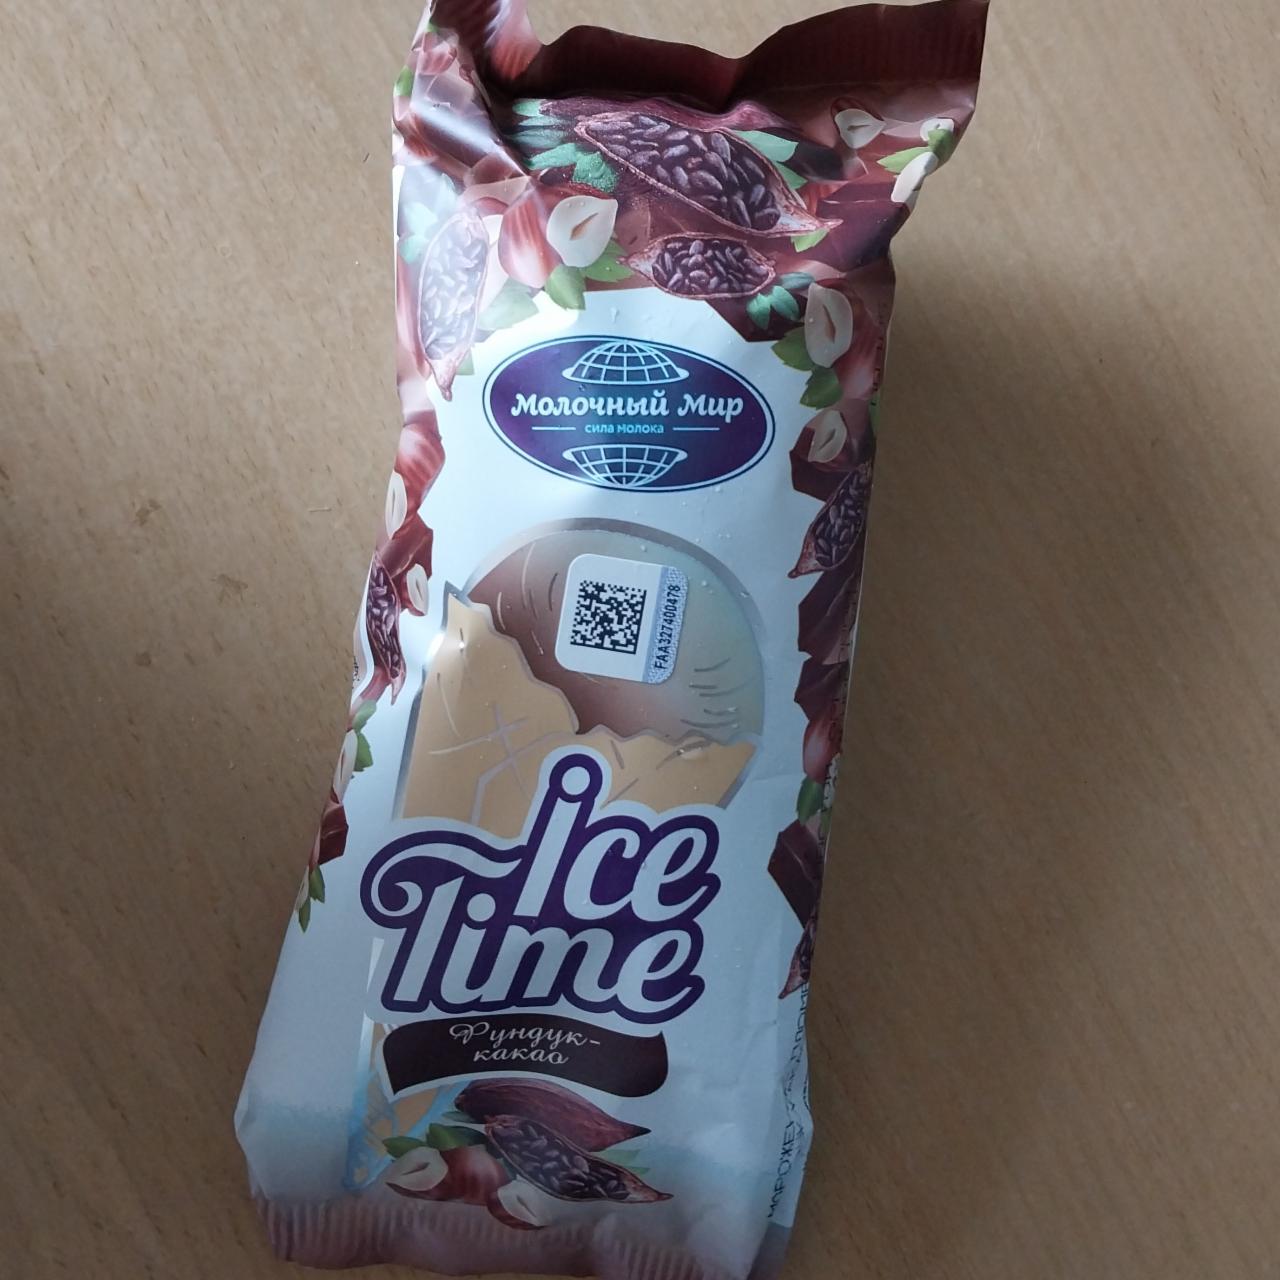 Фото - Мороженое фундук какао Ice time Молочный мир